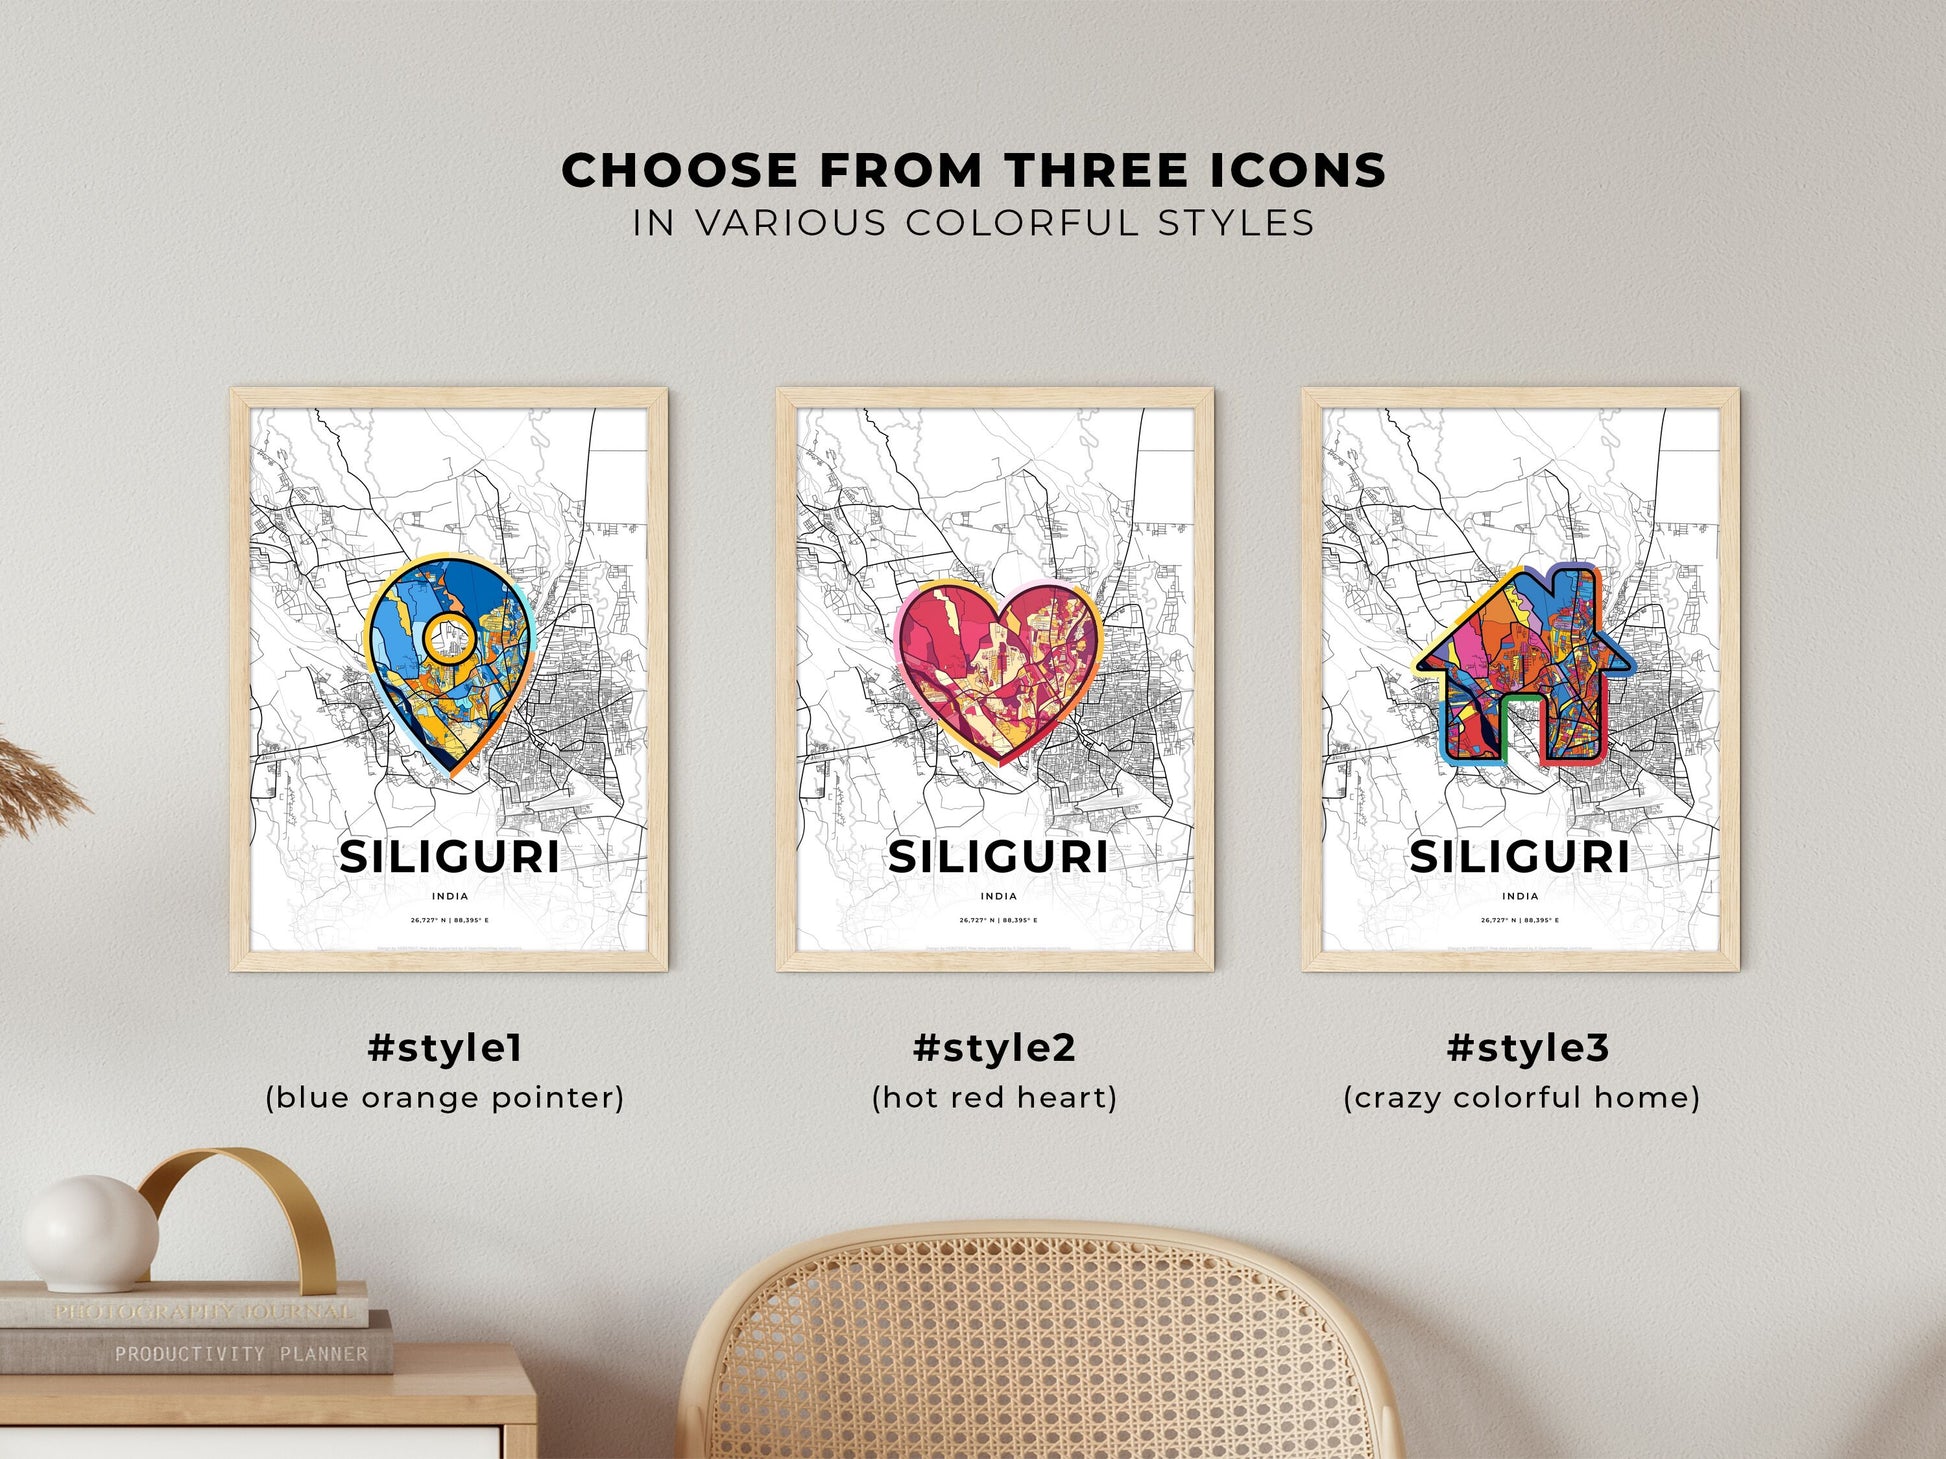 SILIGURI INDIA minimal art map with a colorful icon.